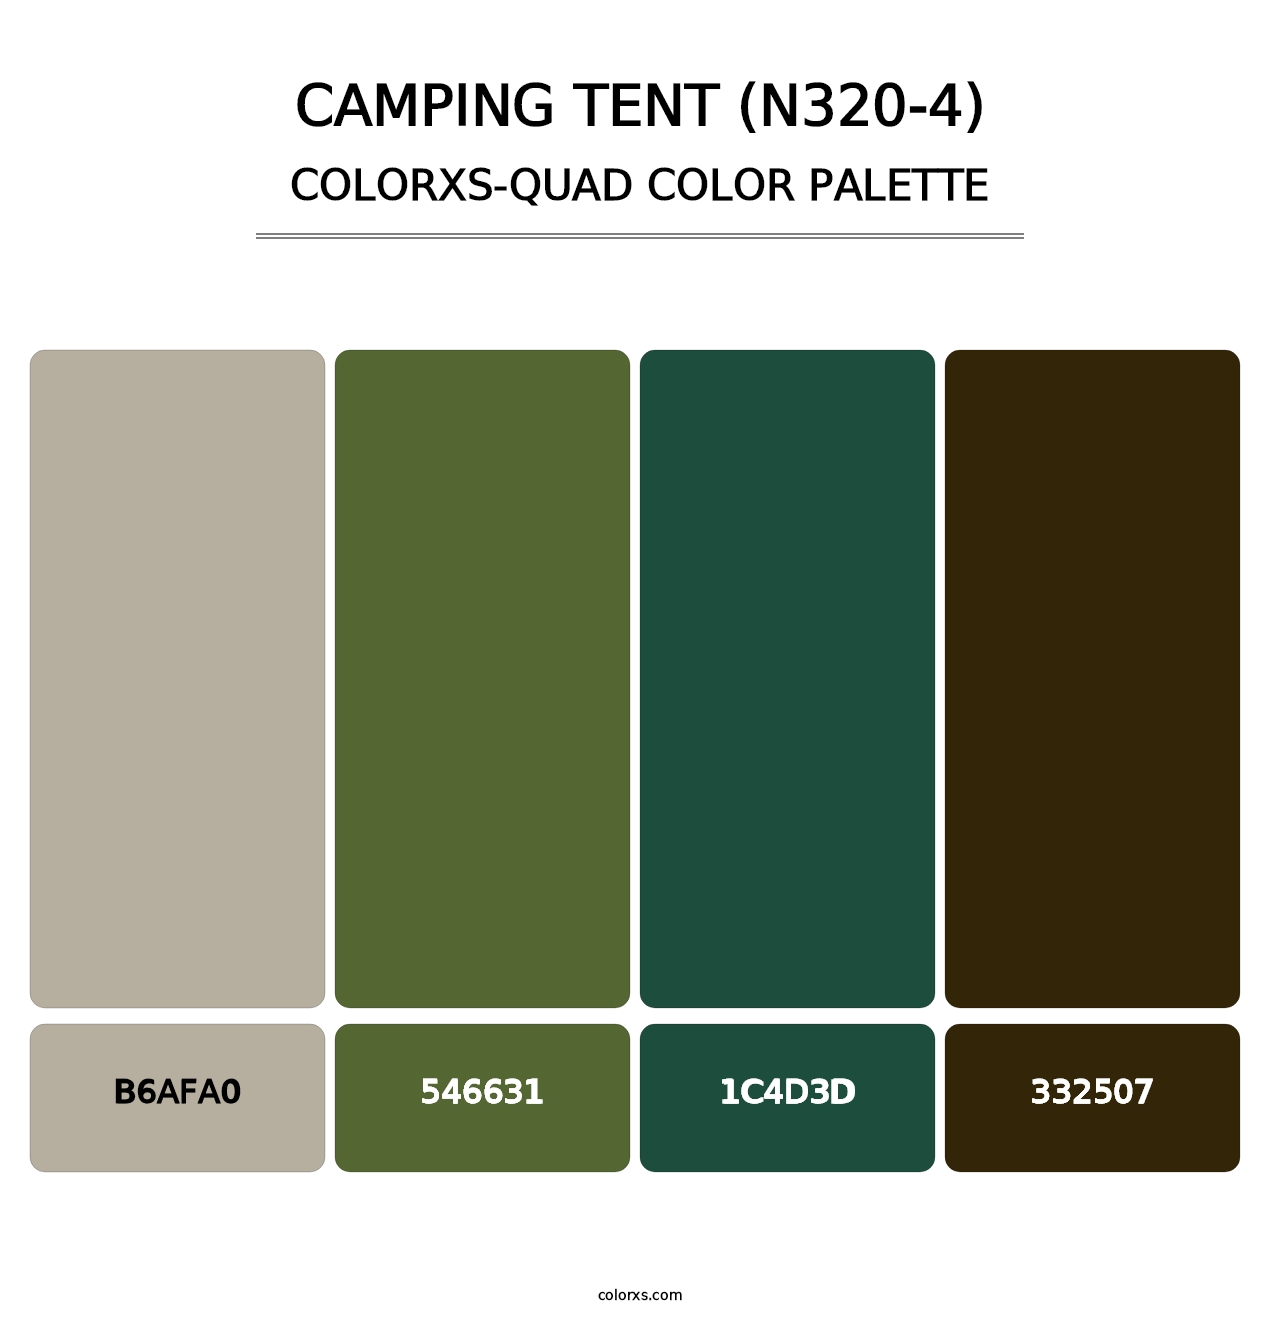 Camping Tent (N320-4) - Colorxs Quad Palette